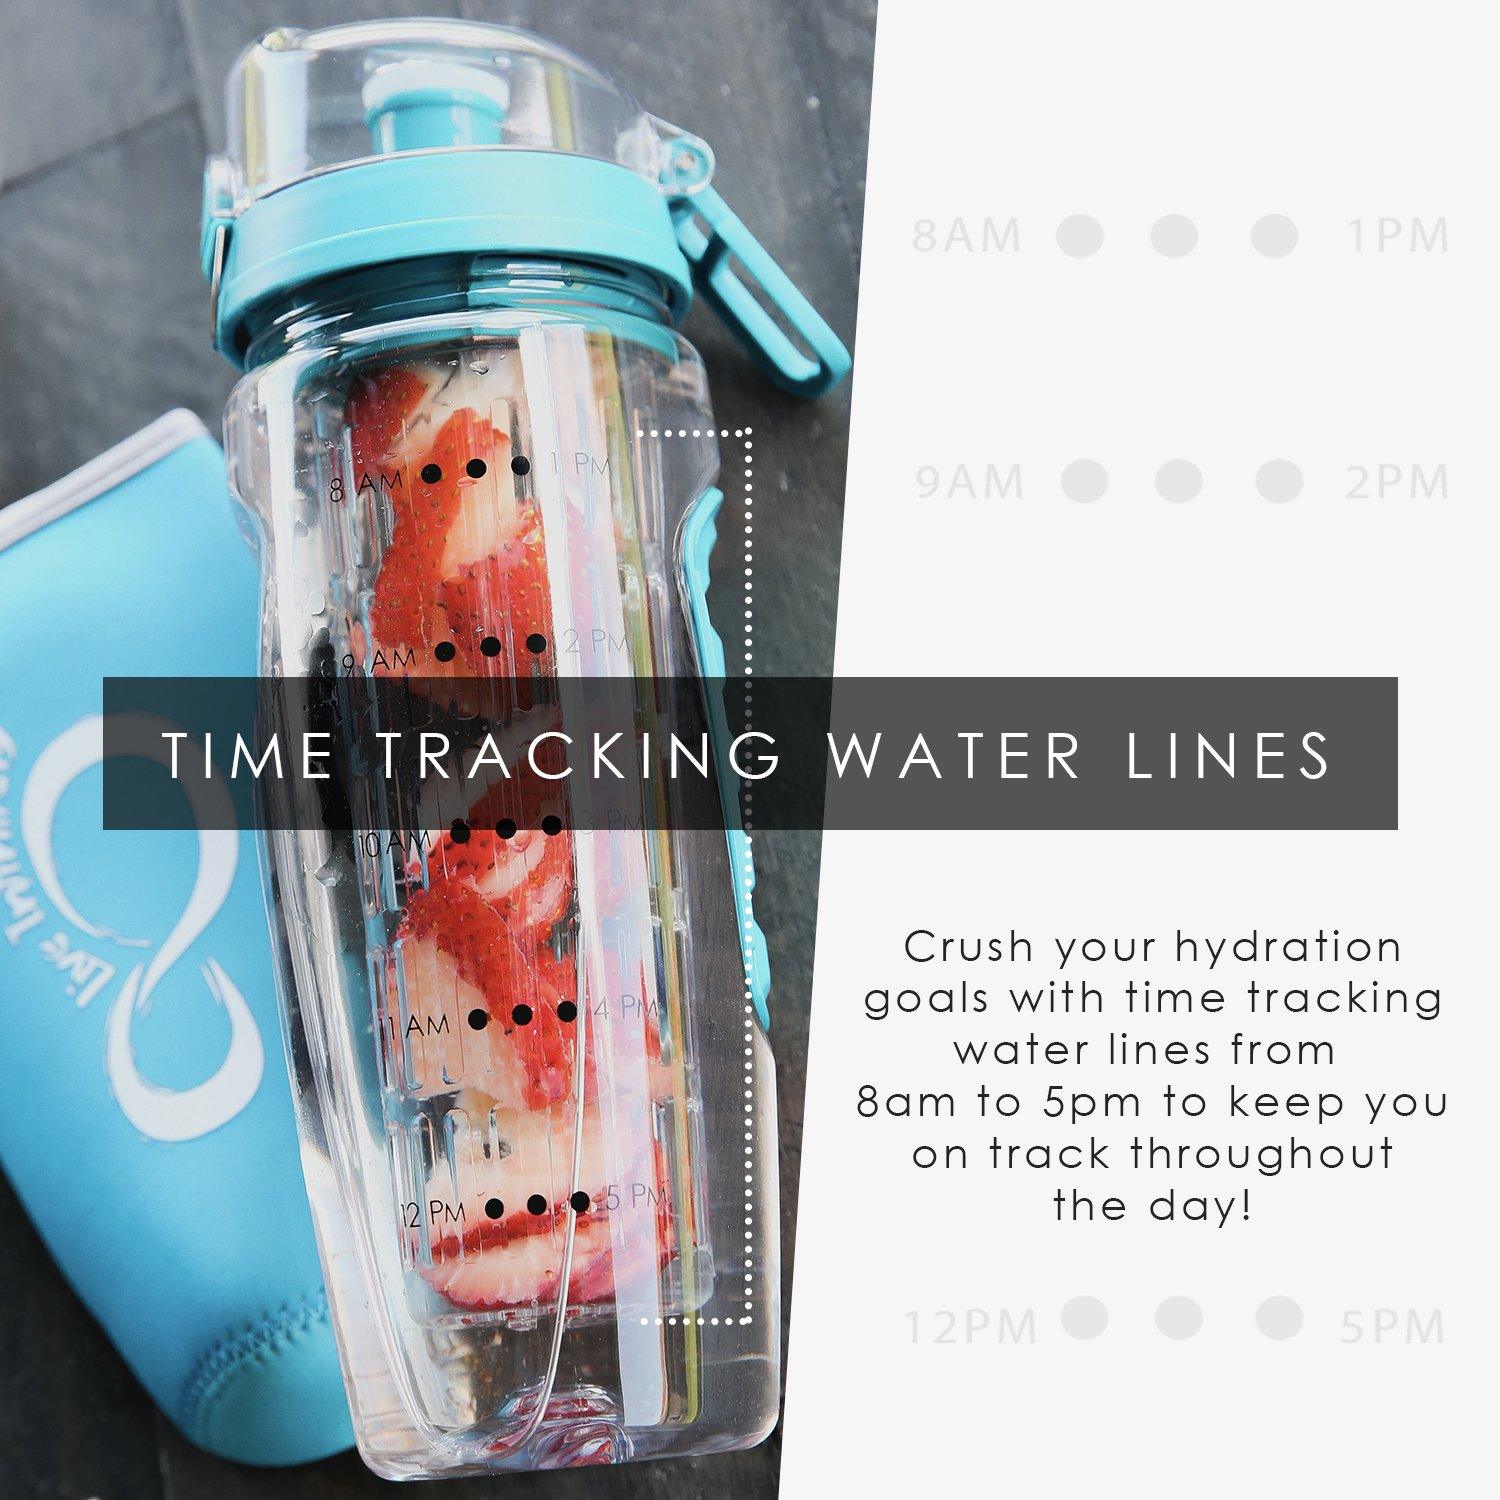 Tritan Fruit Infuser Water Bottle & Fruit Infuser Water Pitcher 